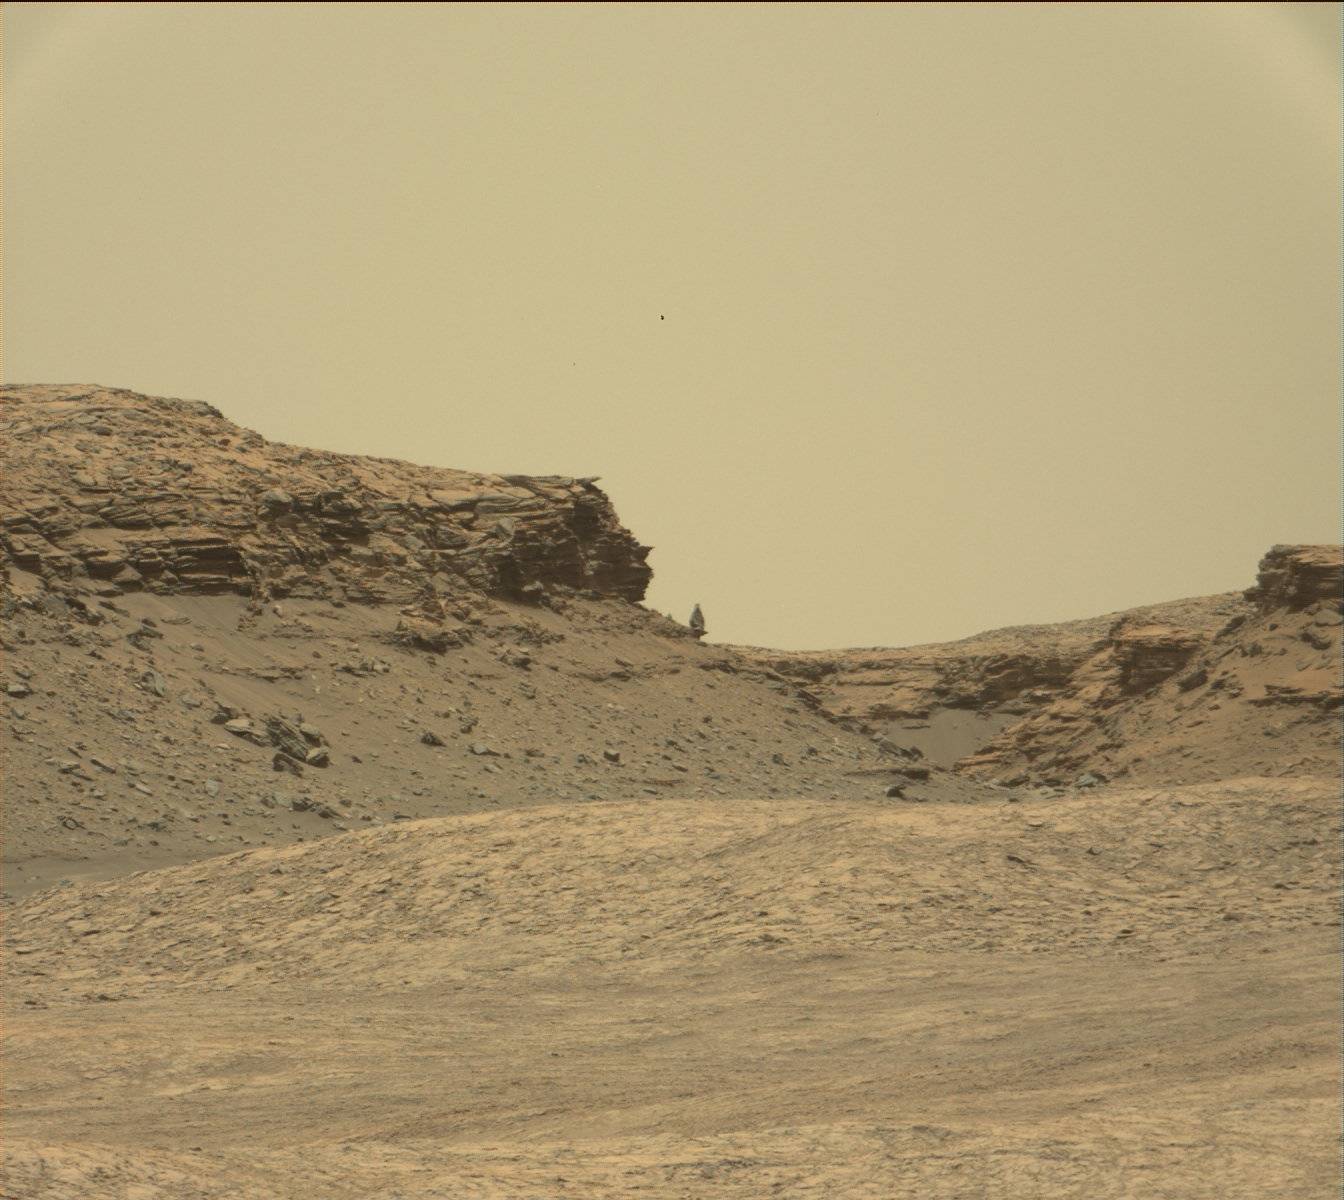 MSL - Curiosity - Safe mode - Mode survie - Juillet 2016 - Mars - JPL - NASA - panne - Mastcam - panorama - Murray buttes